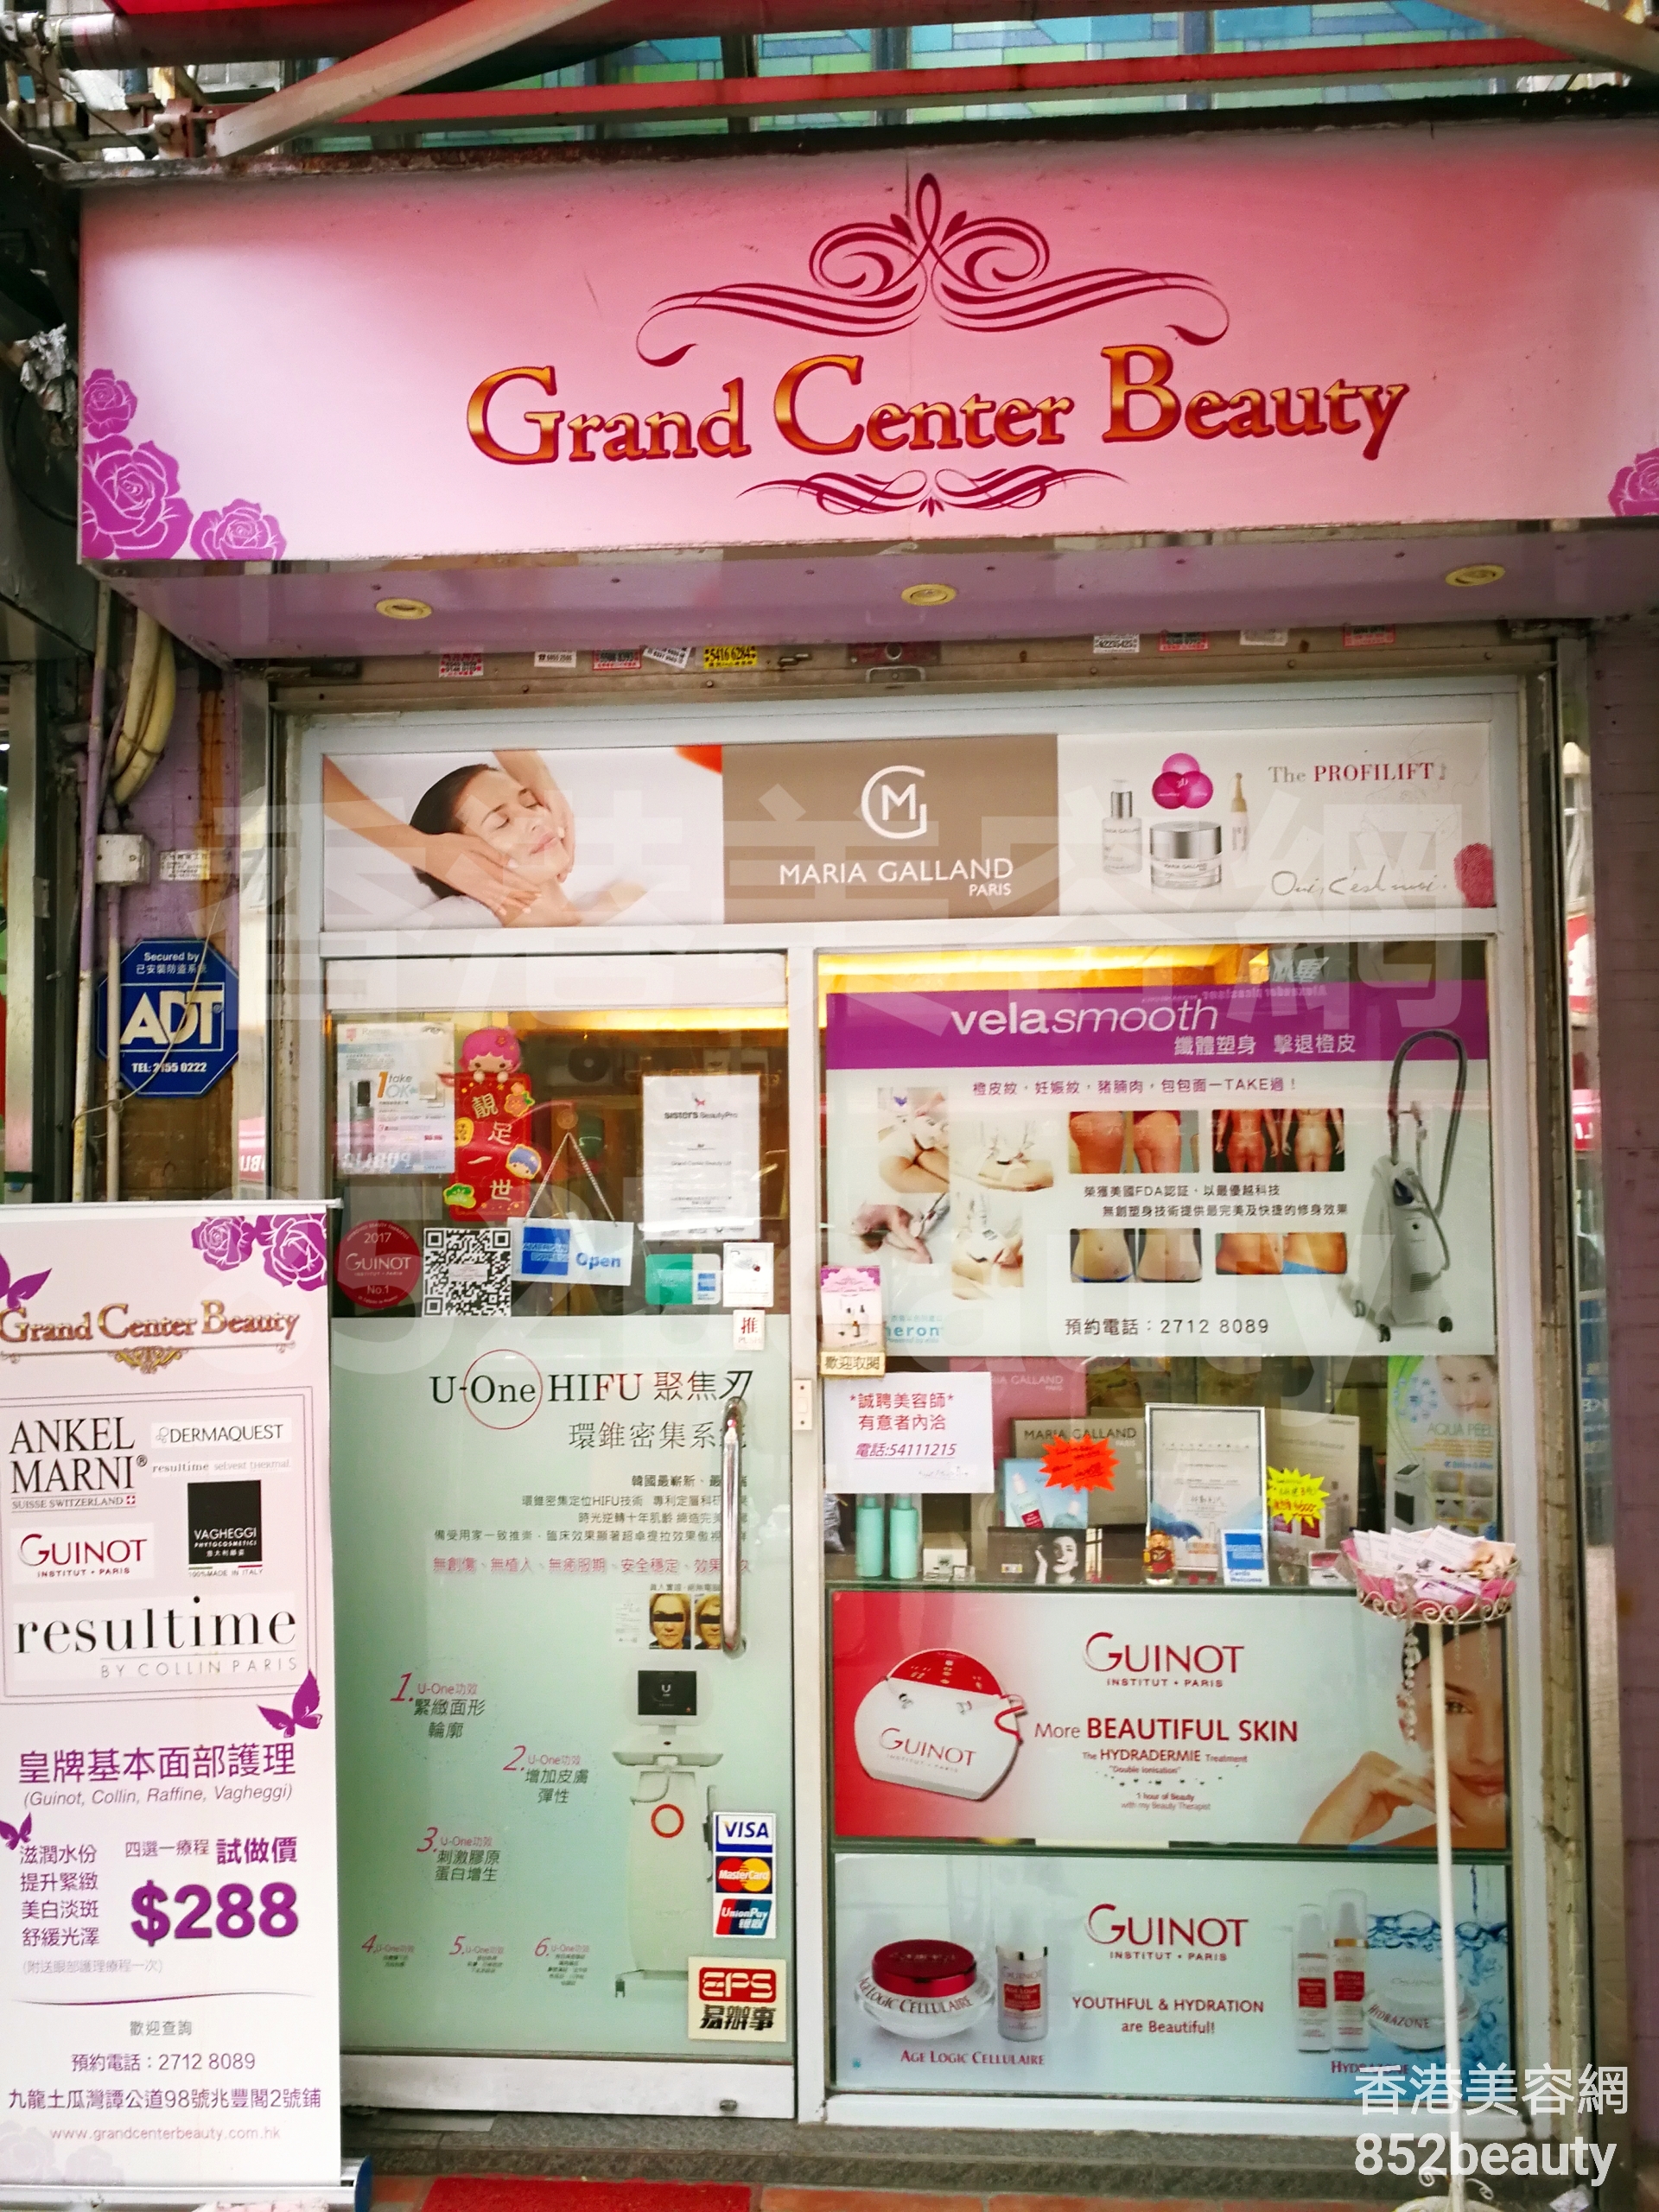 Beauty Salon: Grand Center Beauty